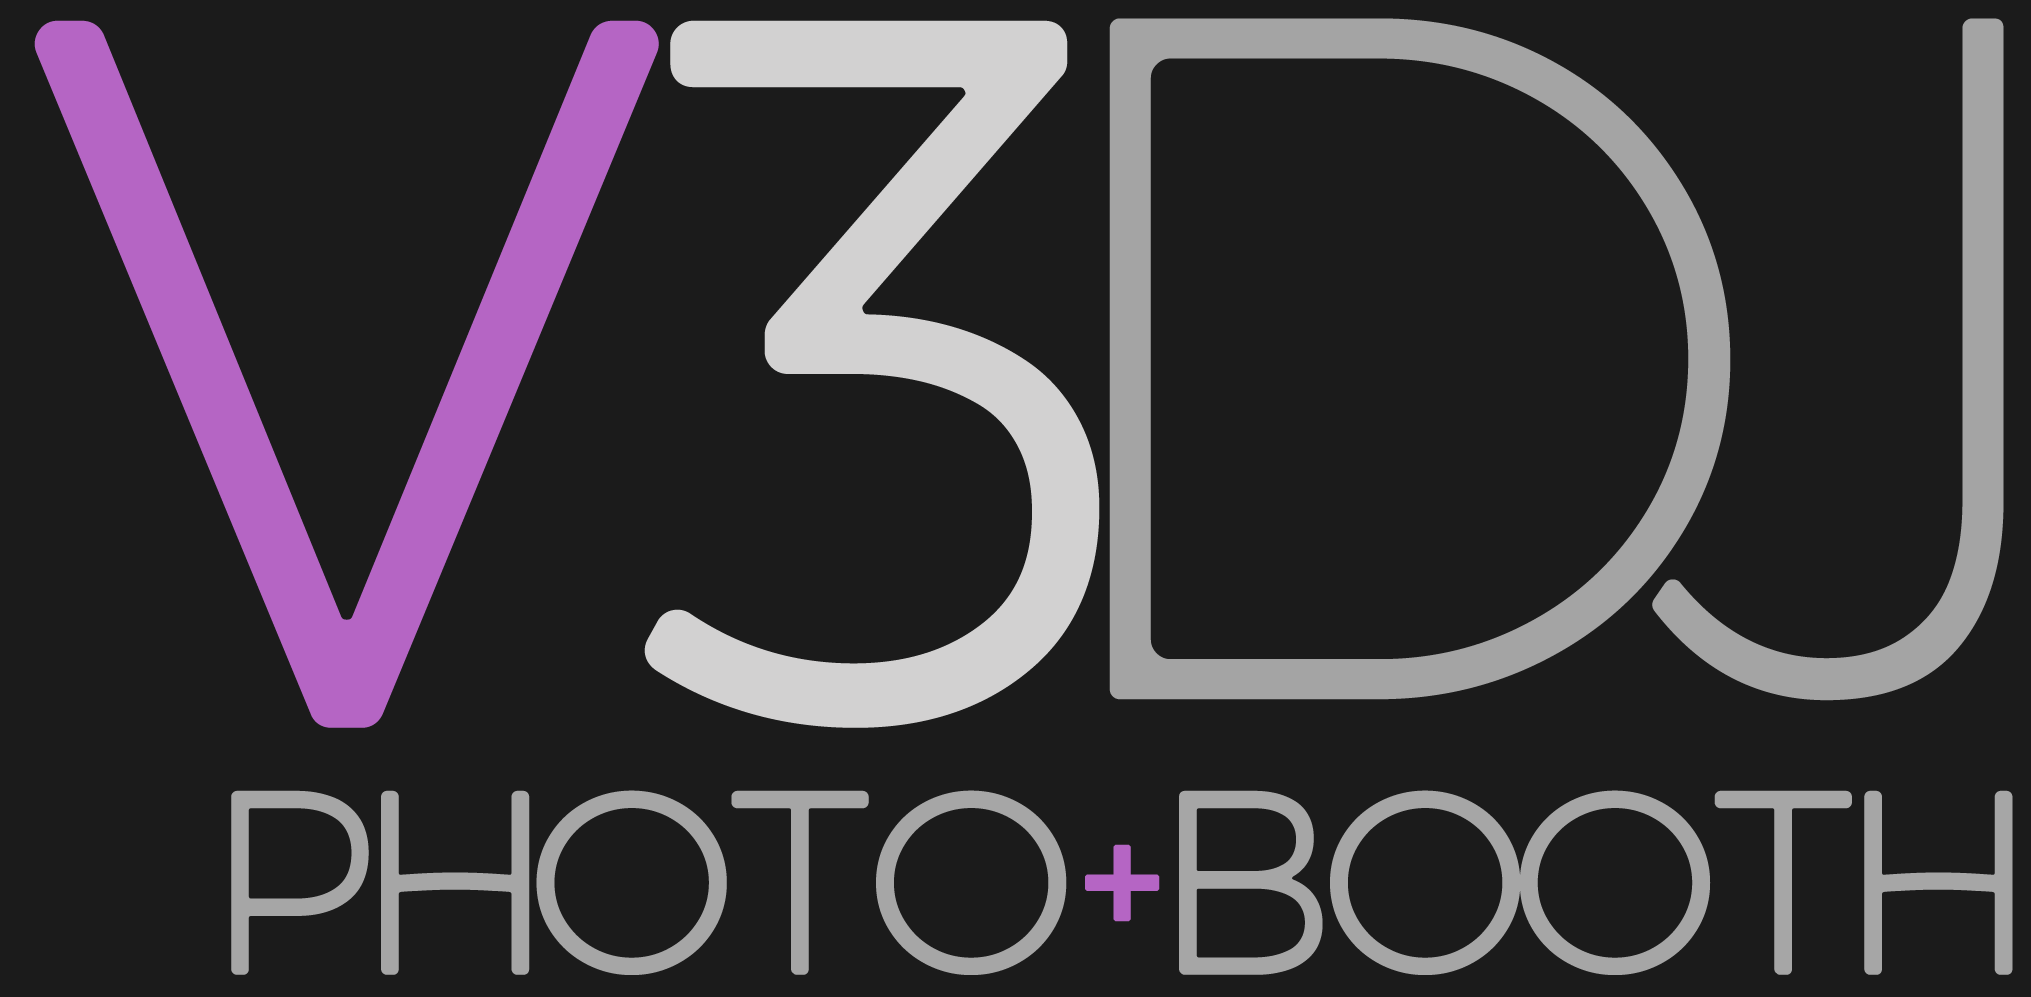 v3 dj and photo booth logo